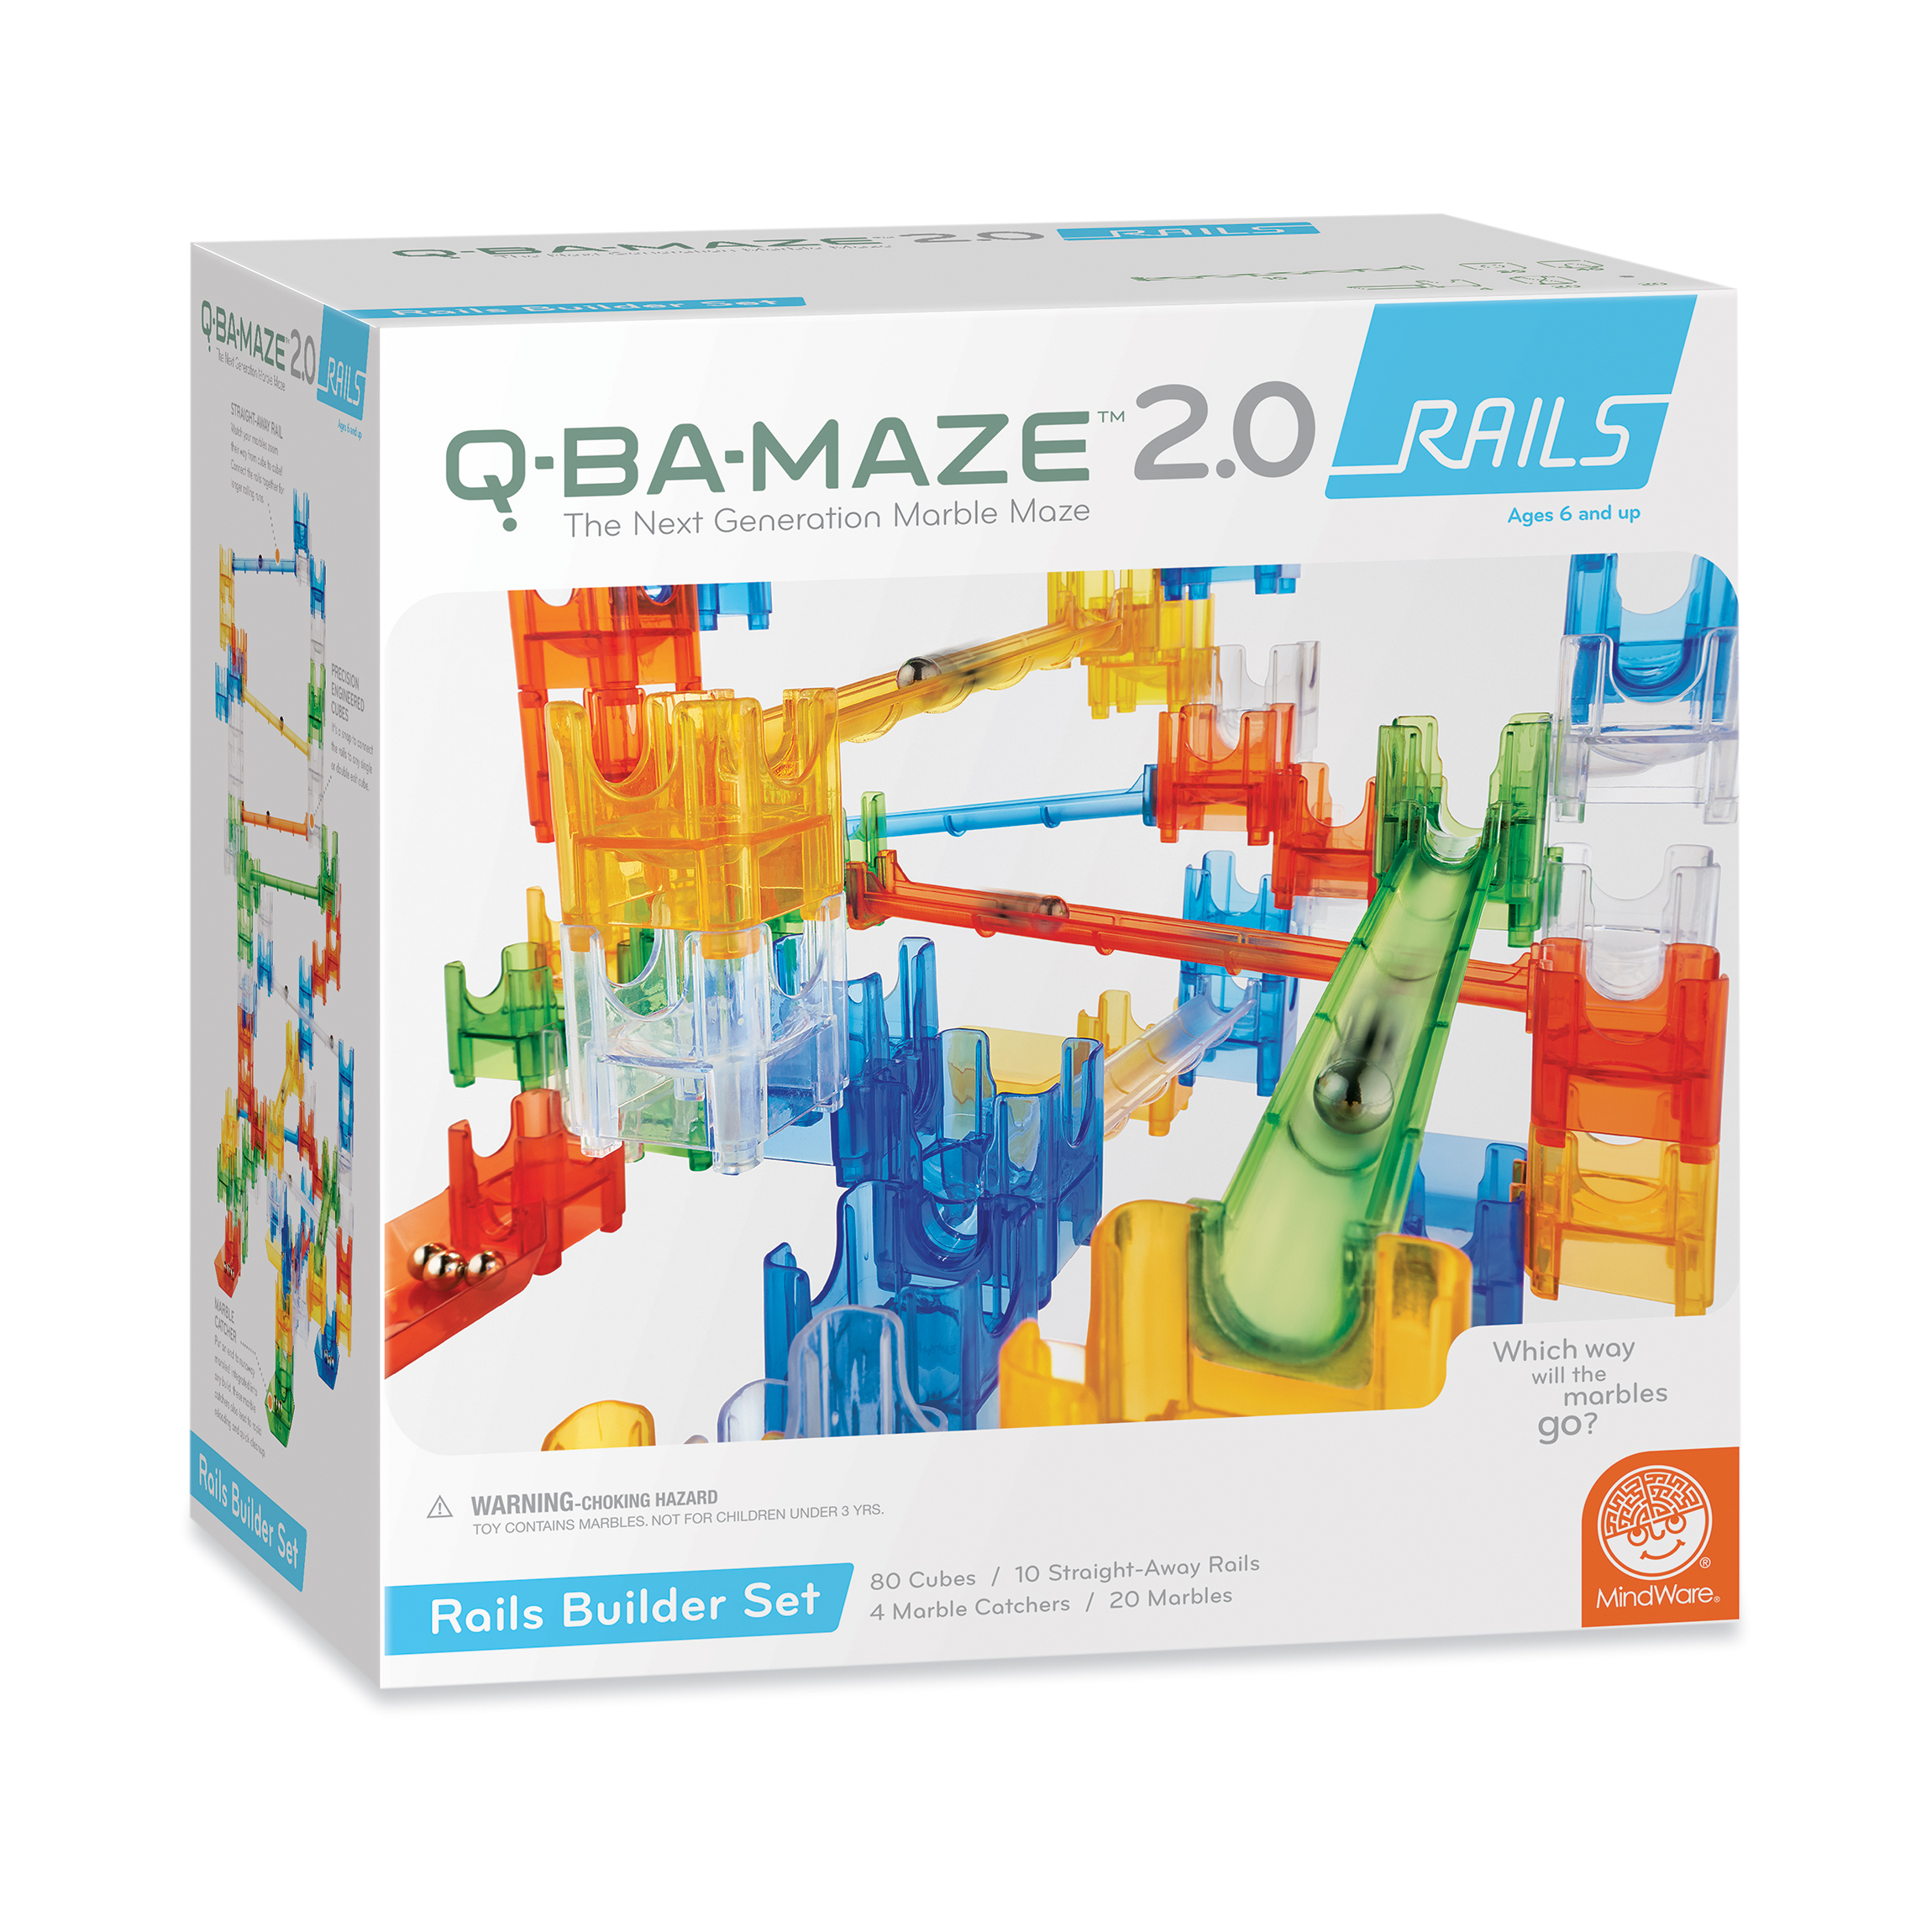 MindWare Q-BA-MAZE 2.0 Rails Builder Set